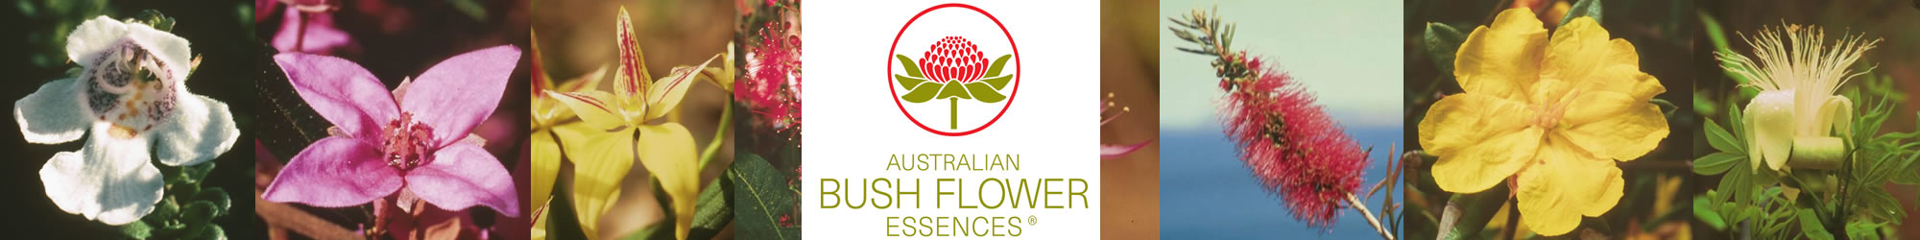 Australian Bush Flower Essences banner